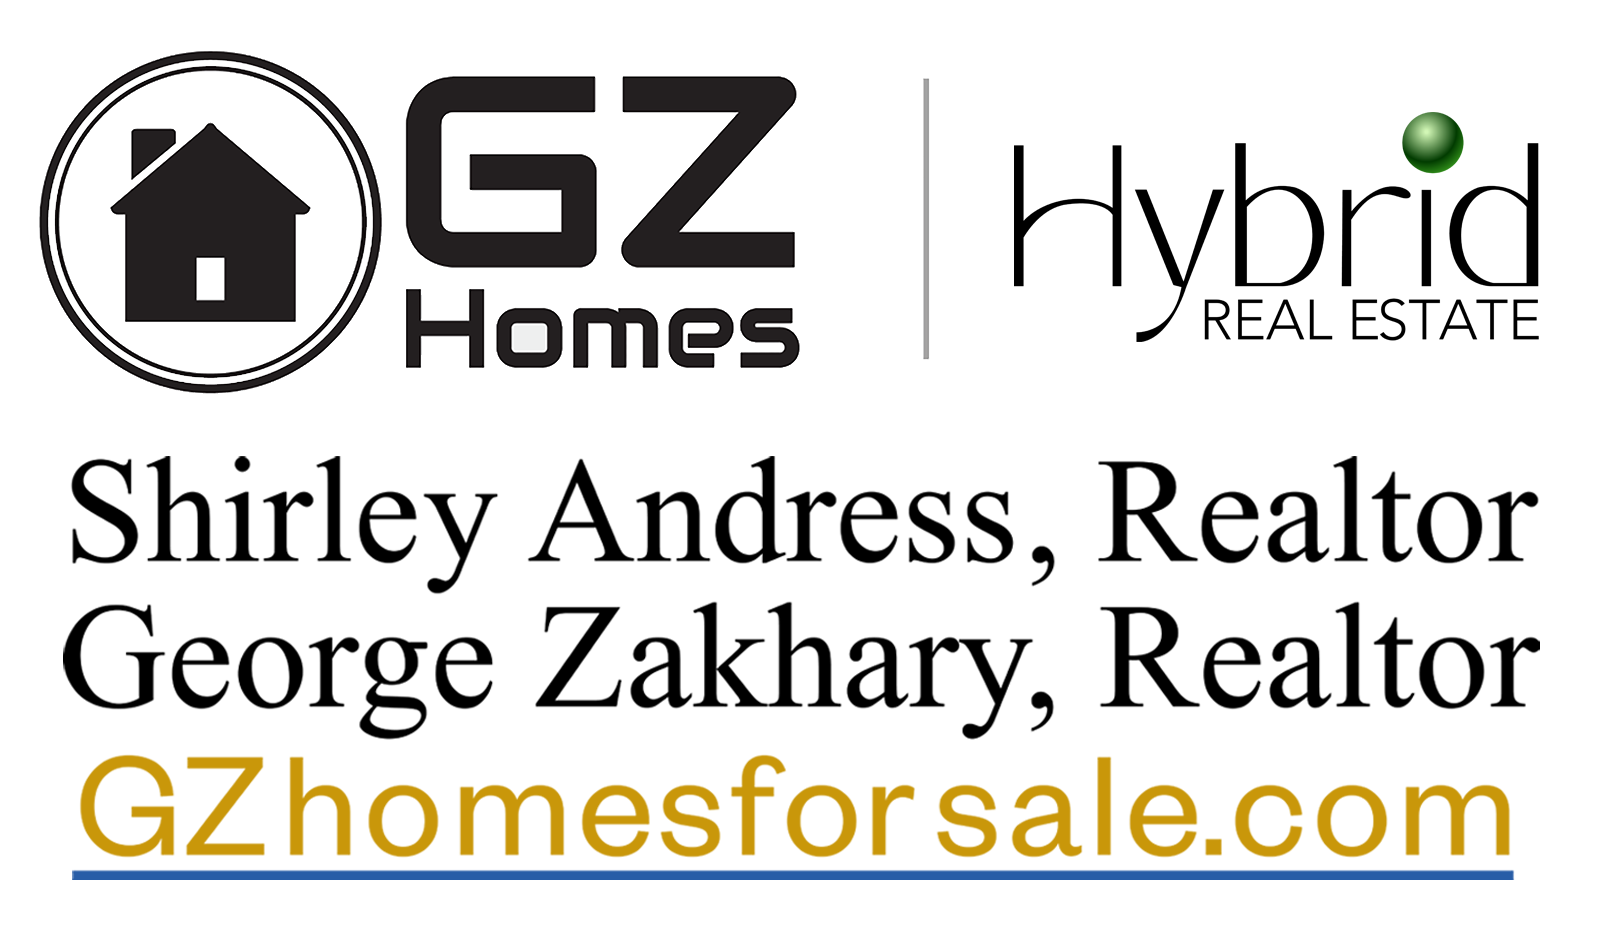 GZ Homes Hybrid